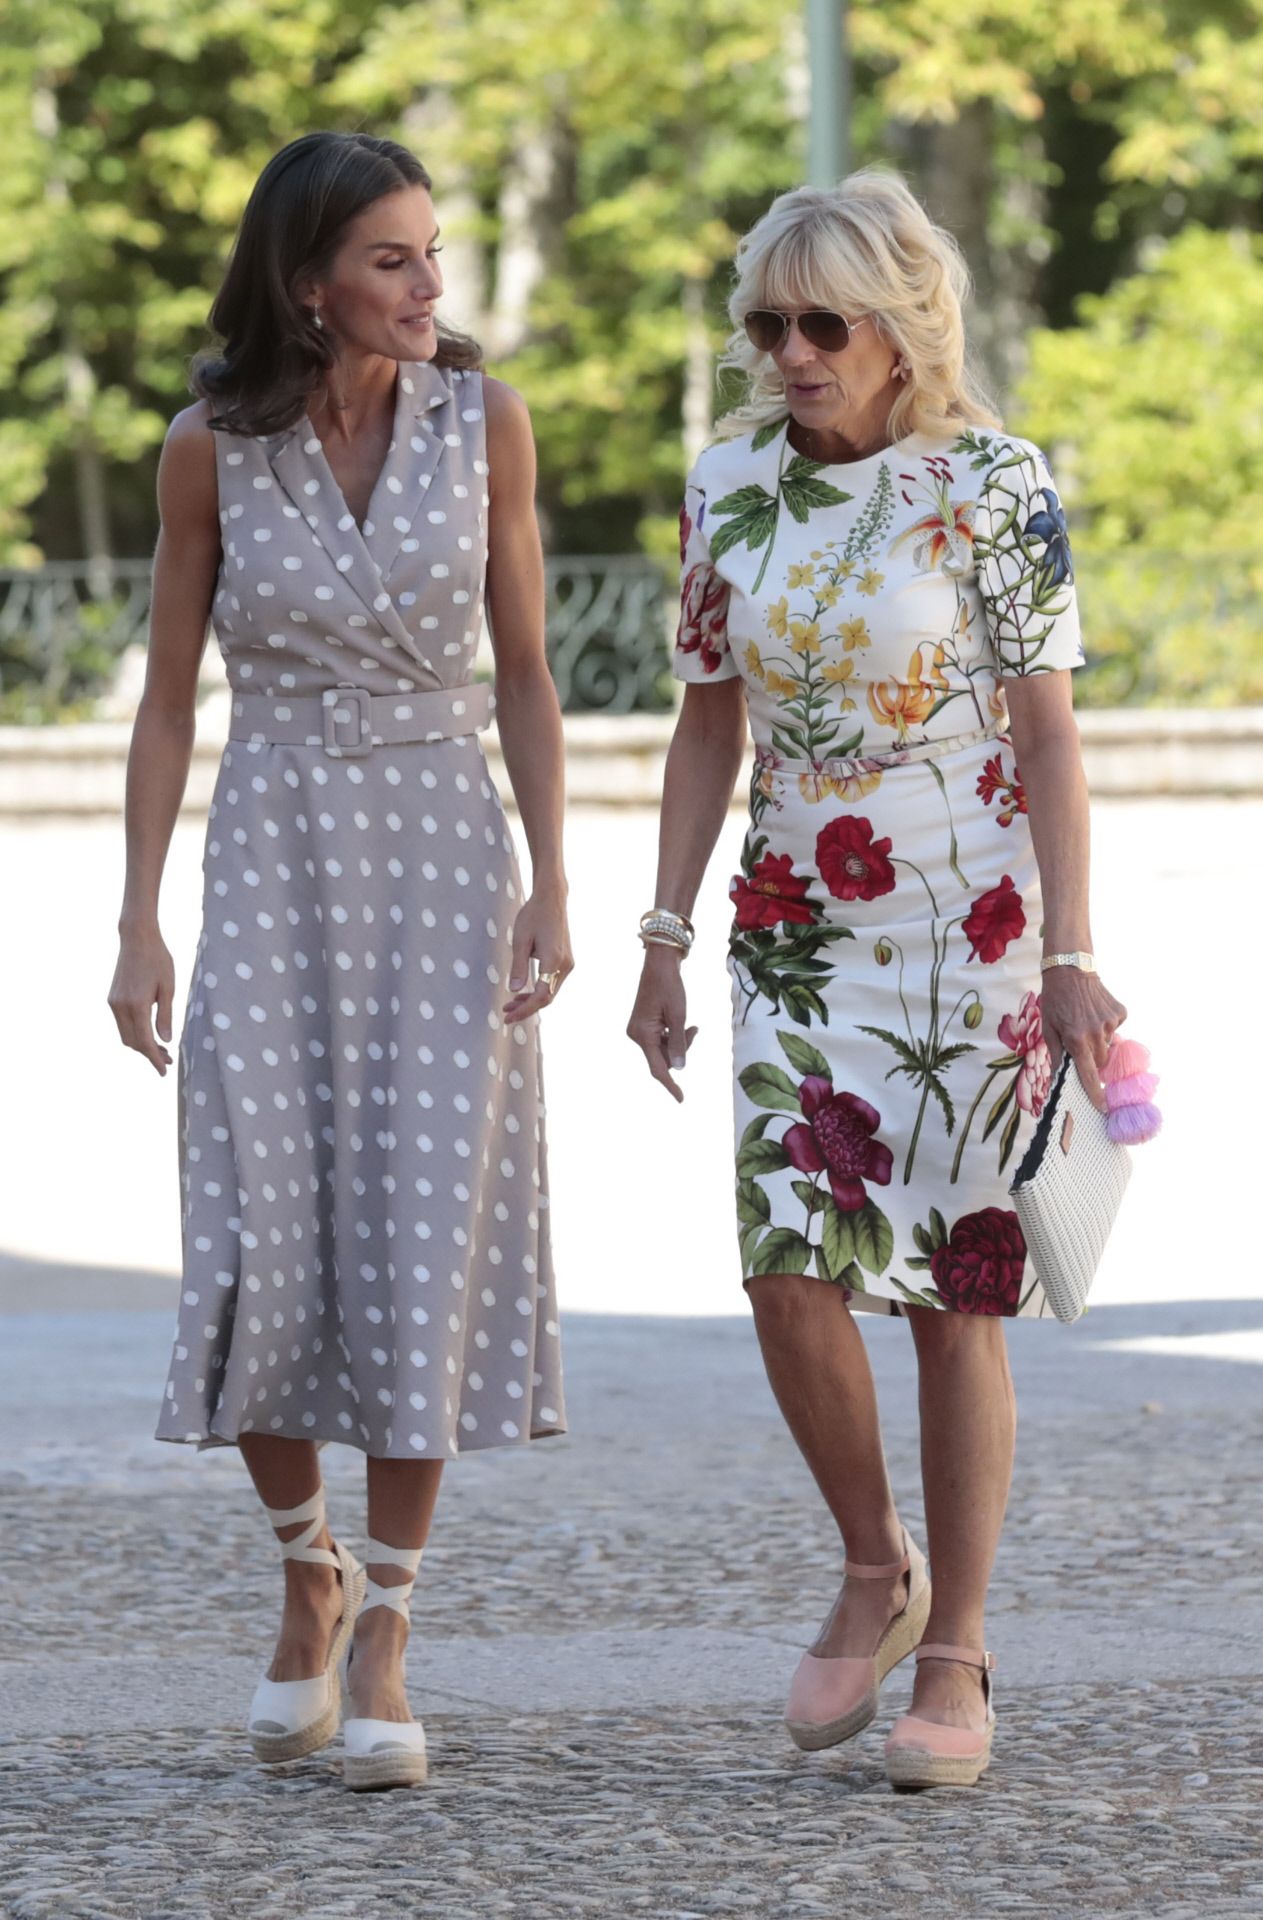 La reina Letizia y Jill Biden estas alpargatas de de la española Castañer - Woman